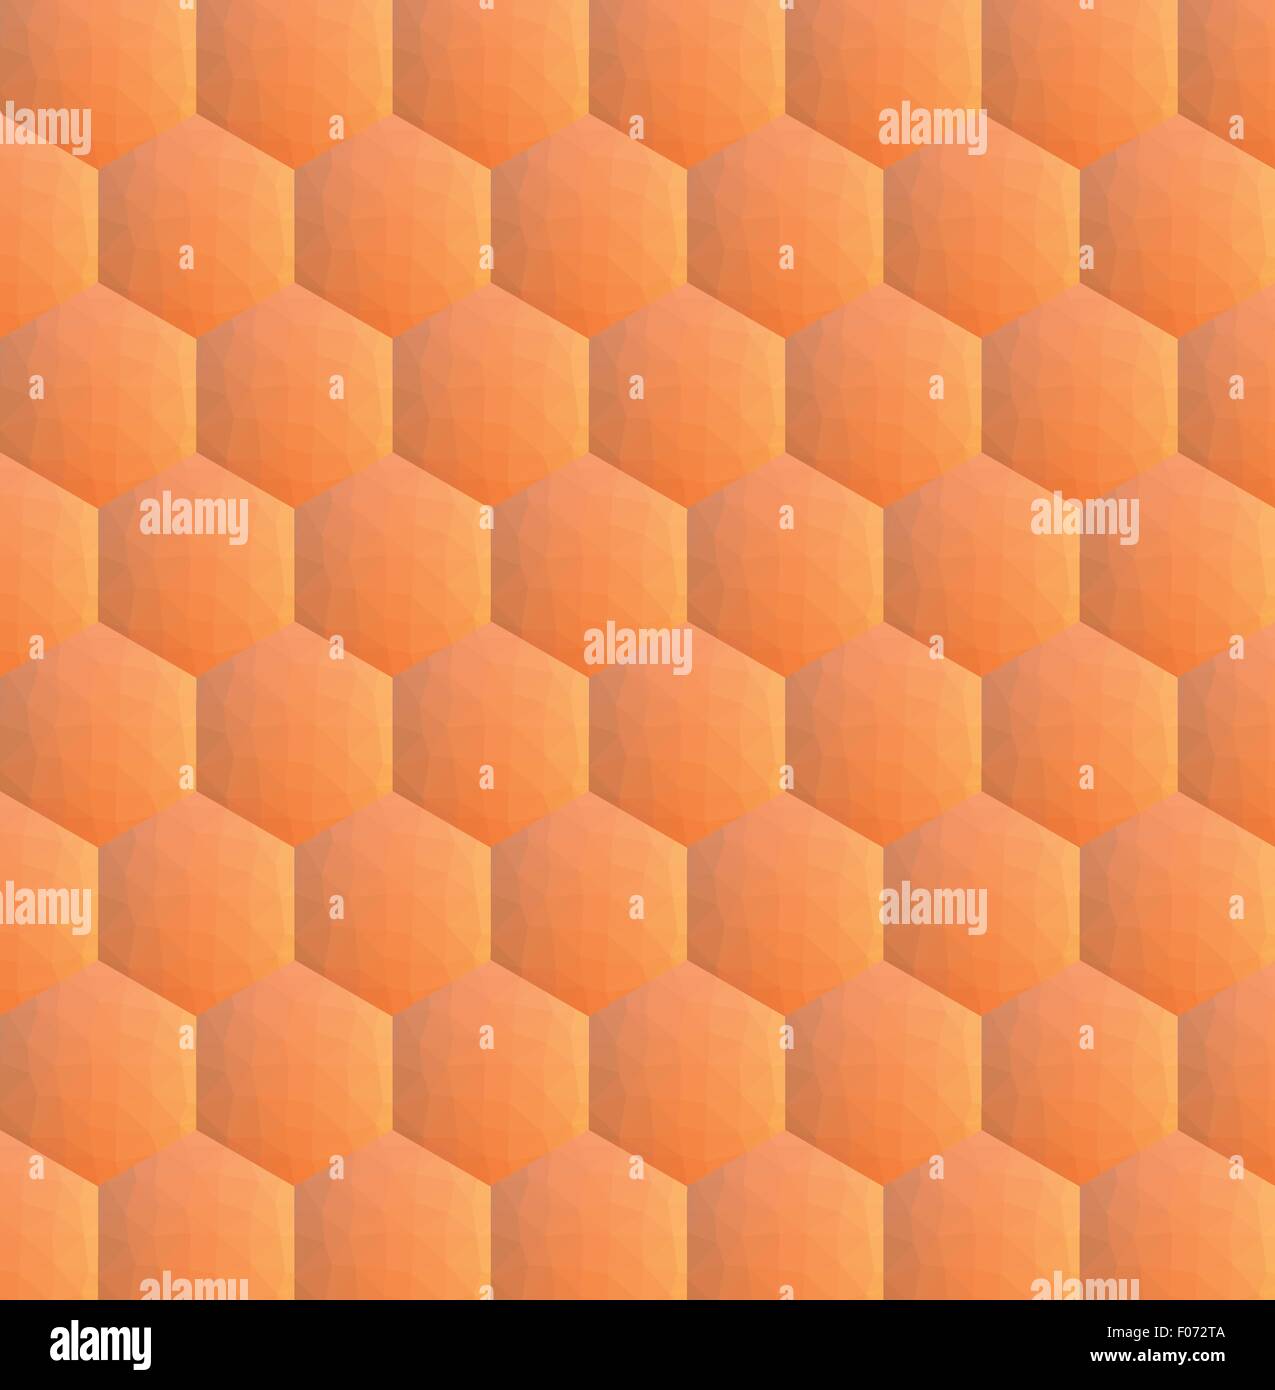 Orange esagonale poligono basso background illustrazione vettoriale Illustrazione Vettoriale